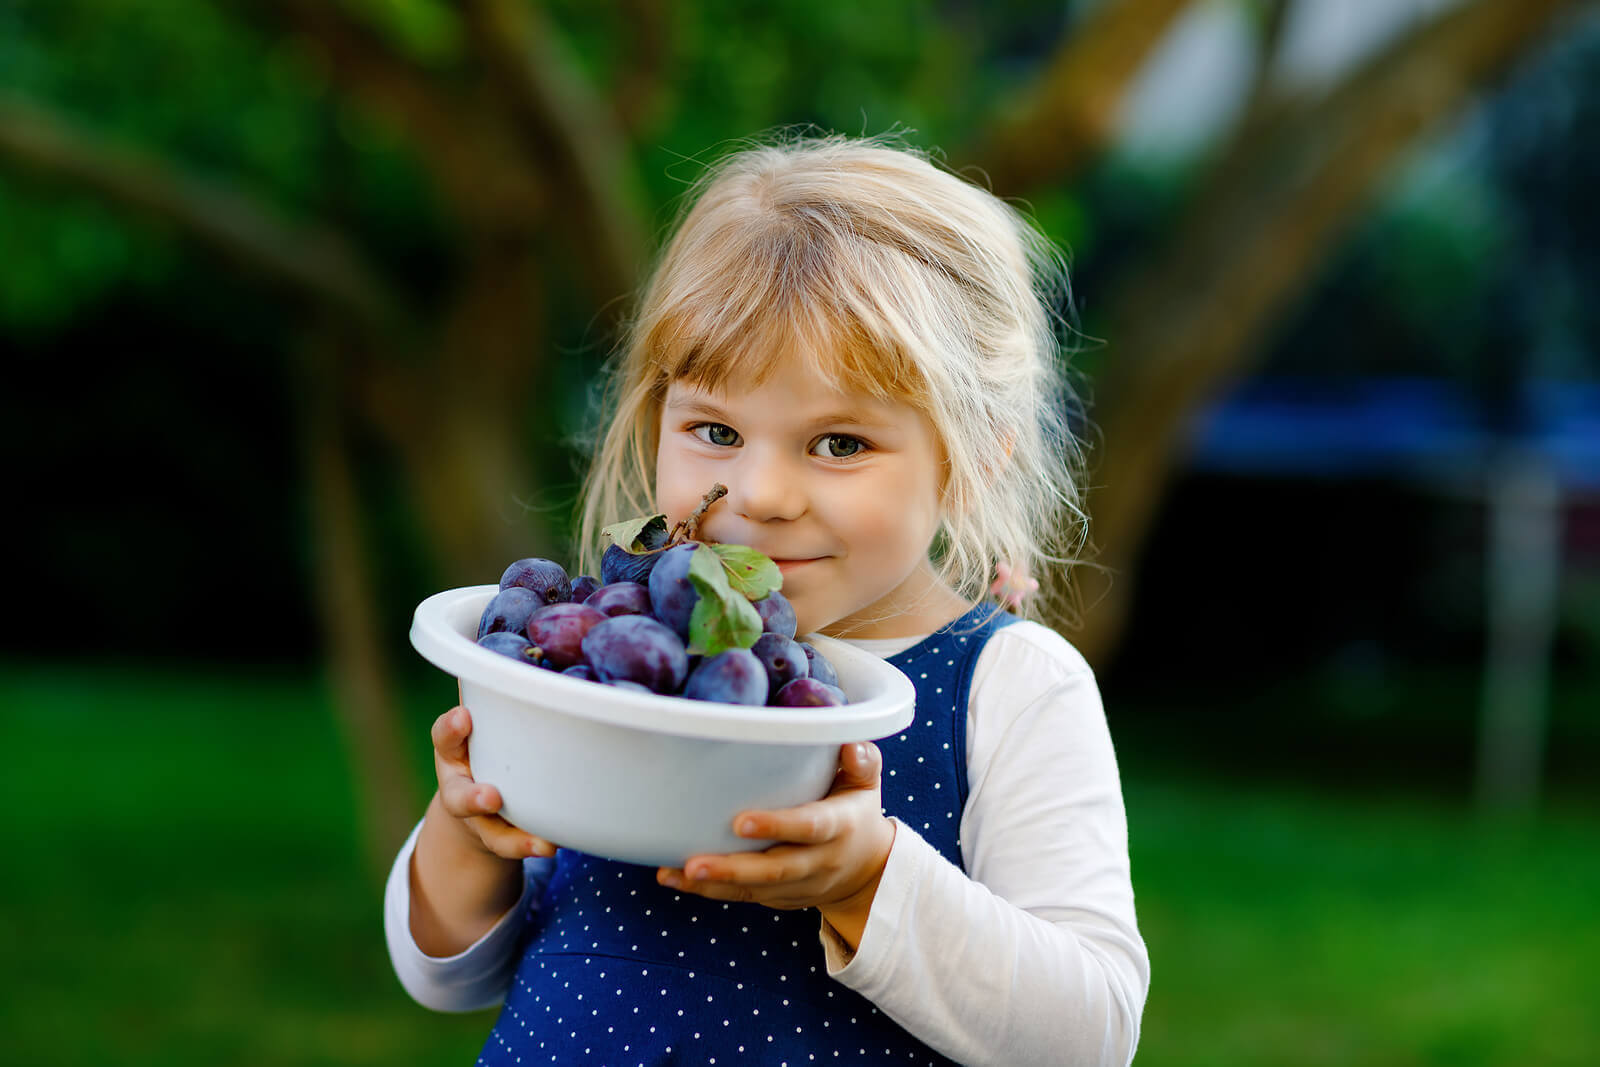 A little girl holding a bowl of fresh fruit.